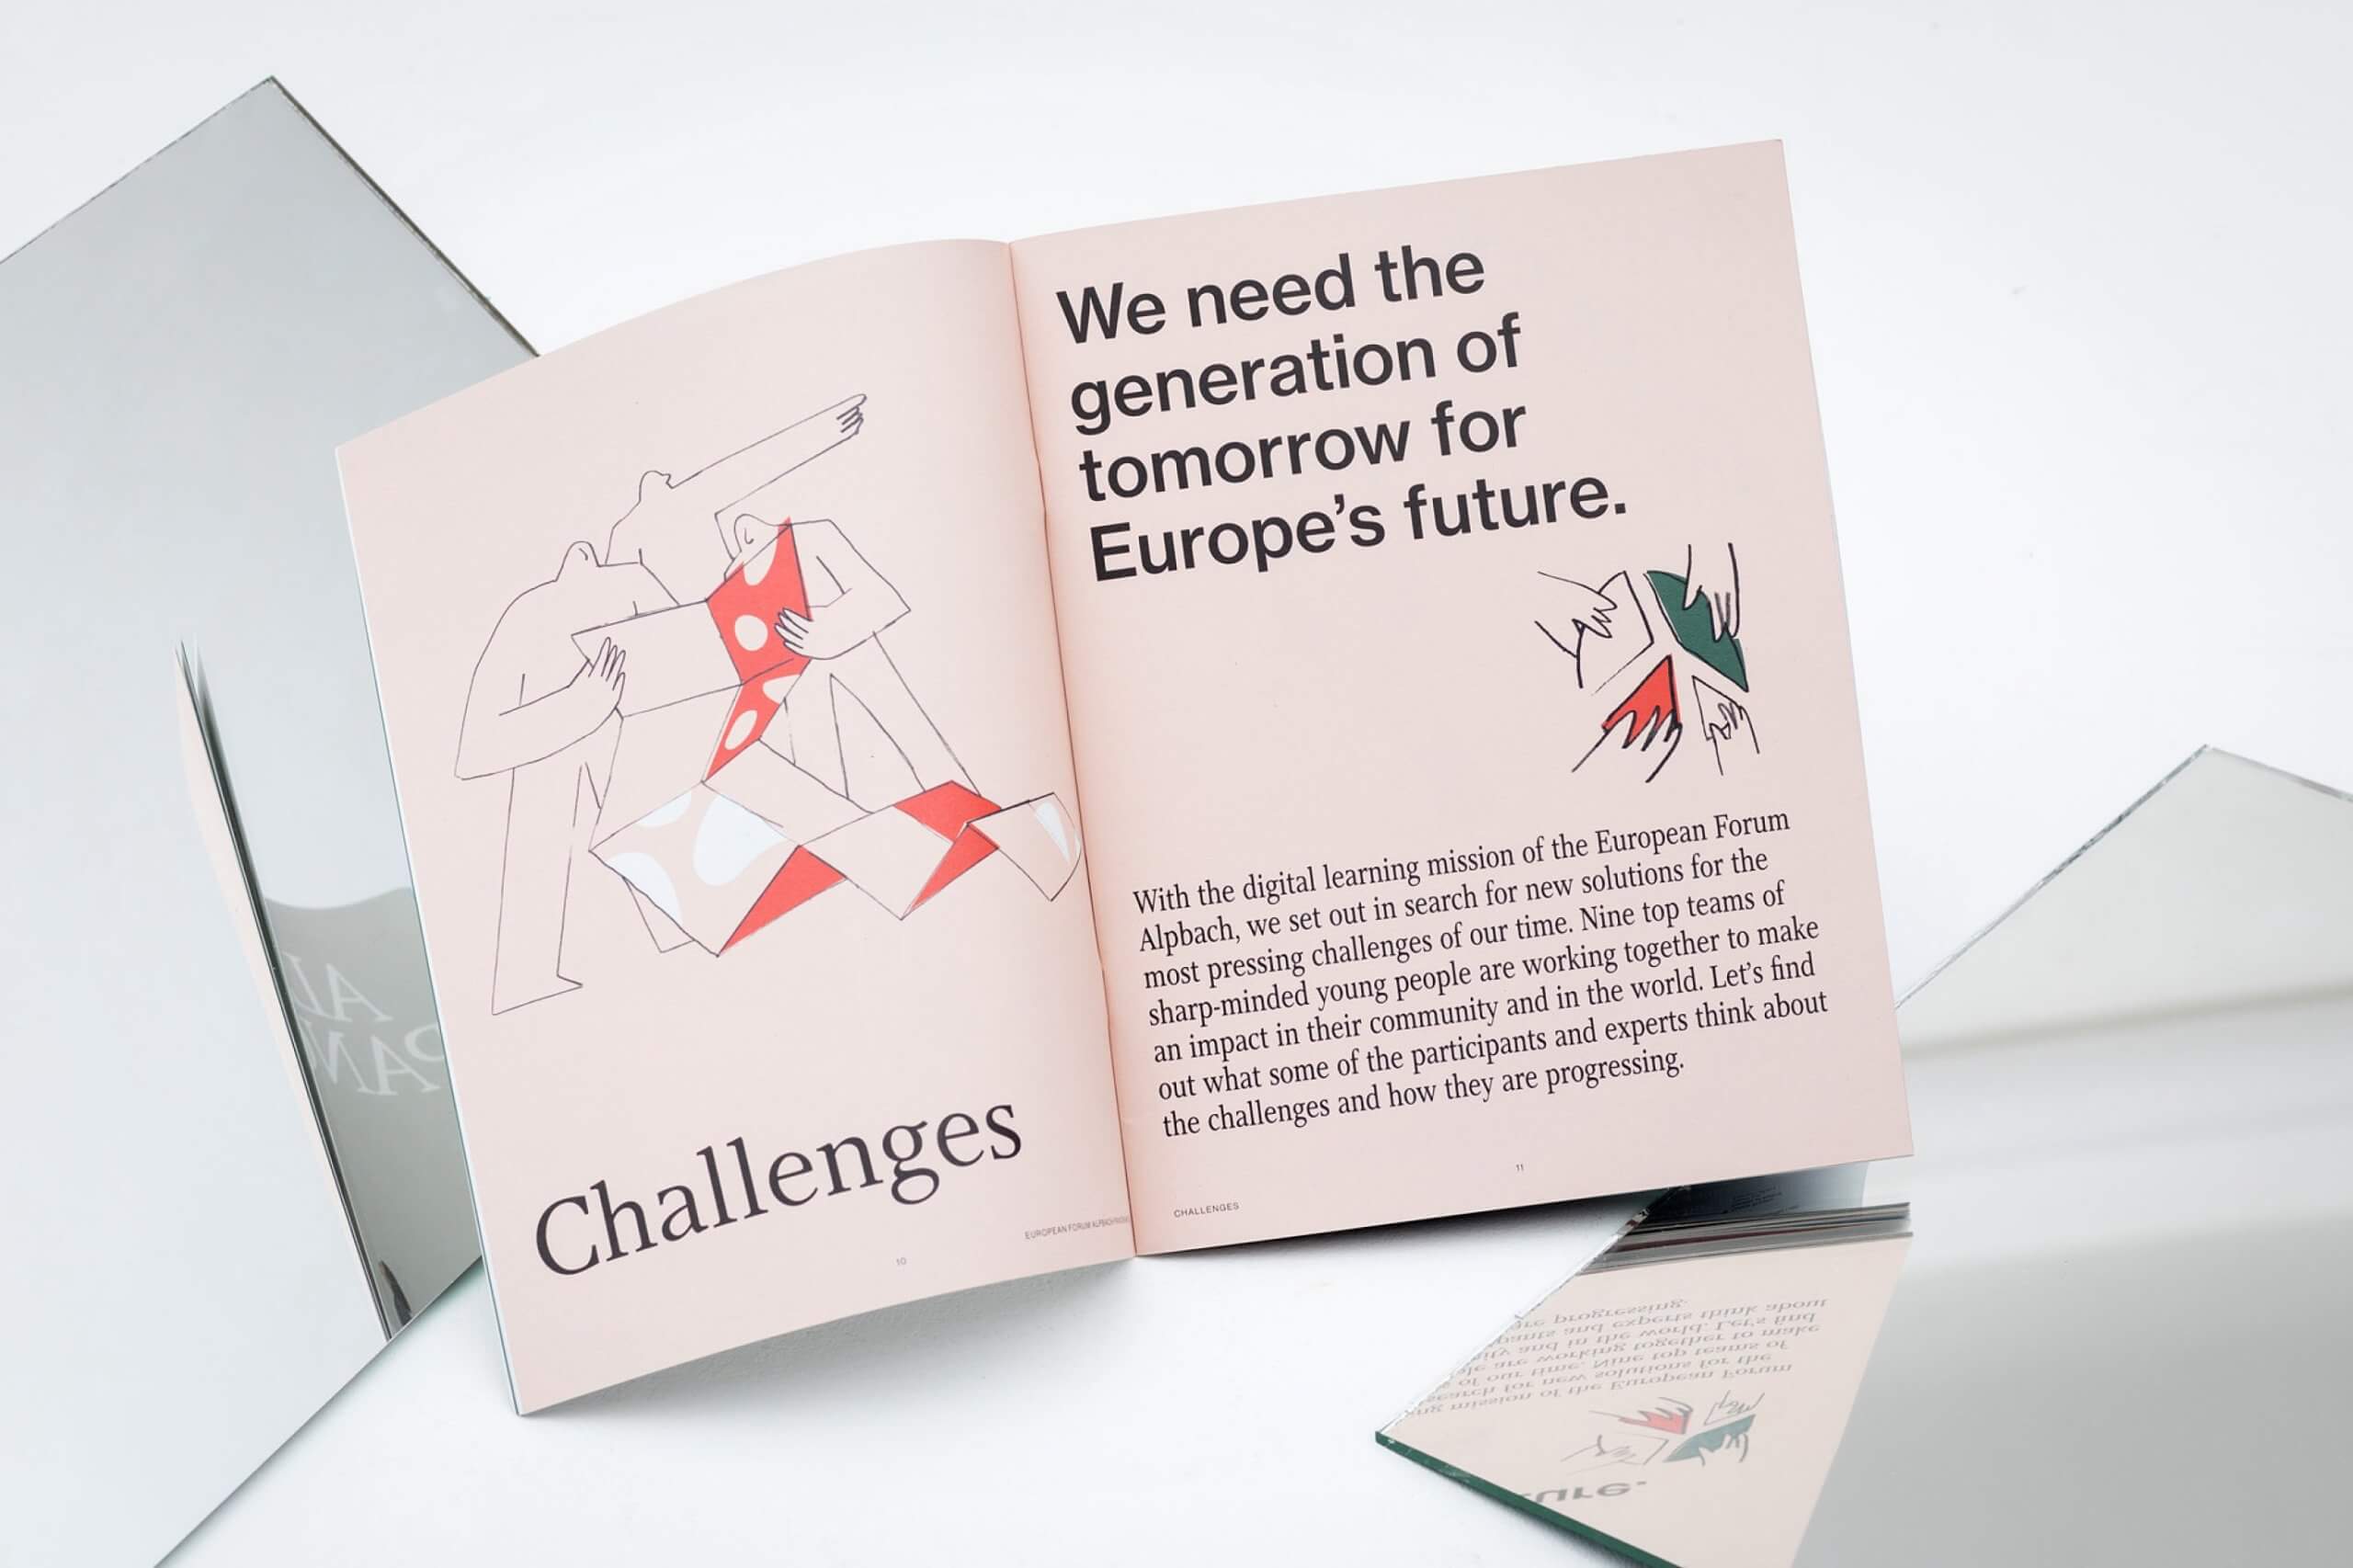 European Forum Alpbach / Editorial Design / Alpbach Panorama